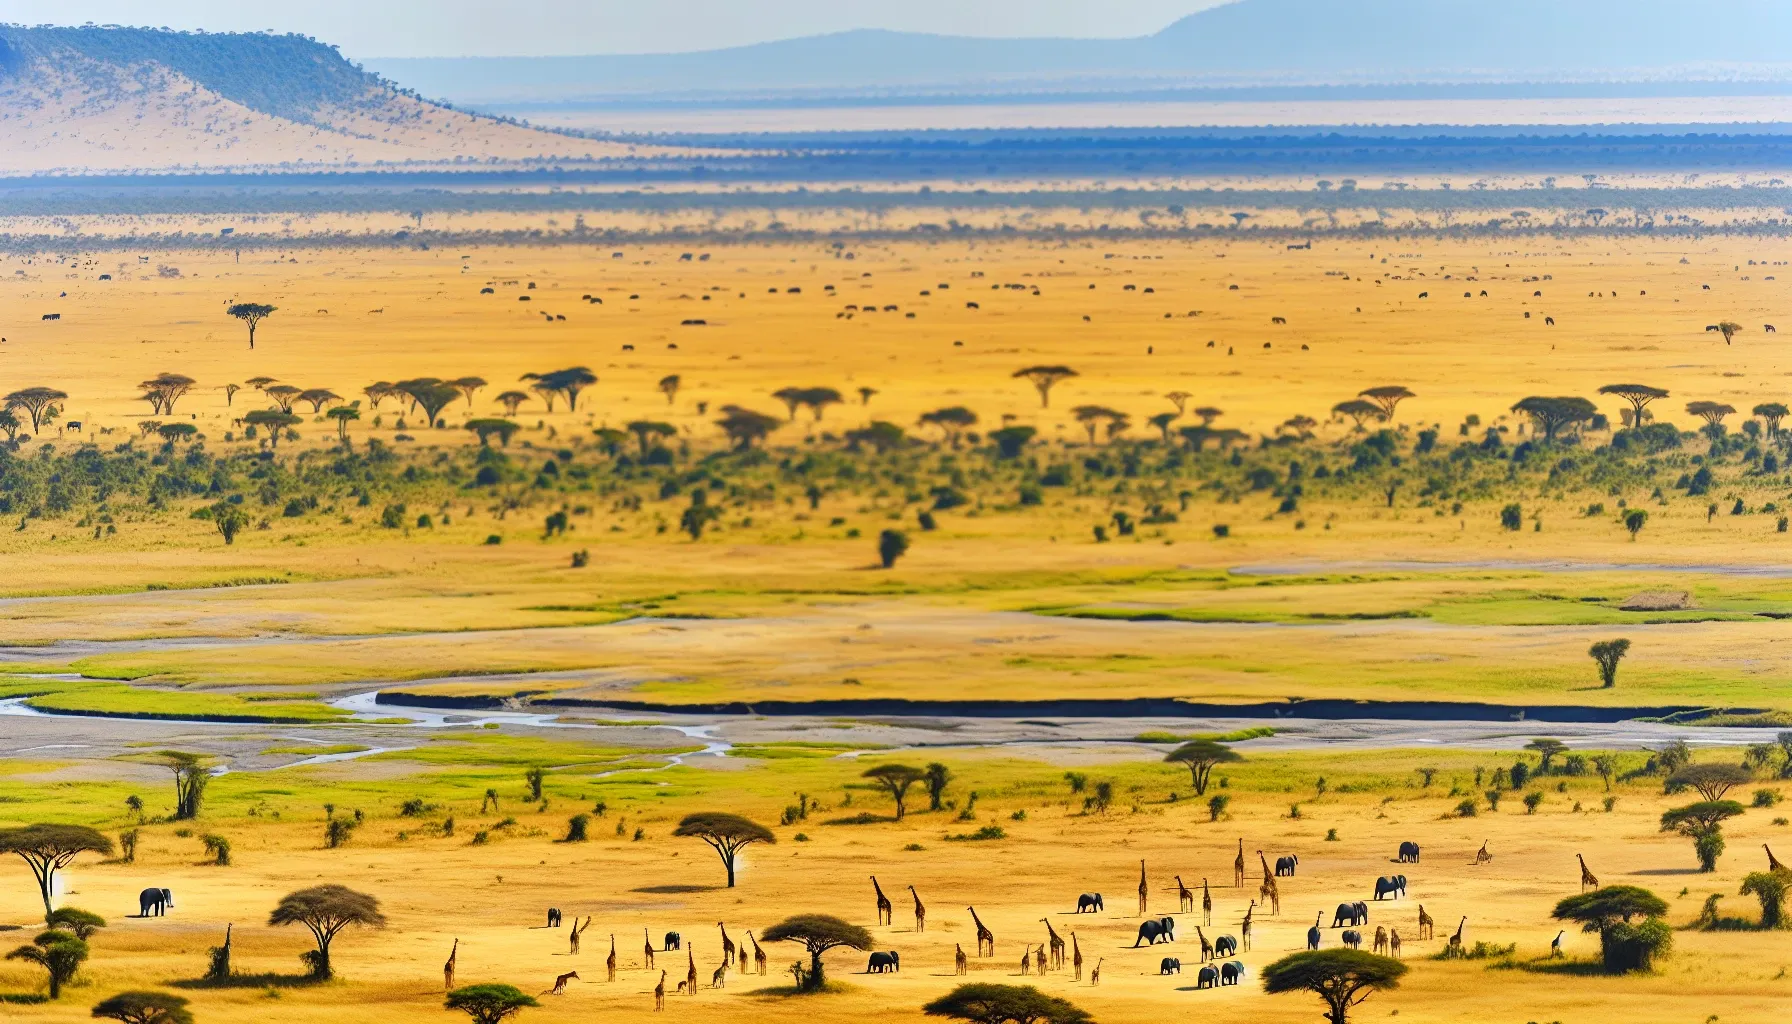 Aerial view of African savannah, a vast grassy field where wildlife roams freely.